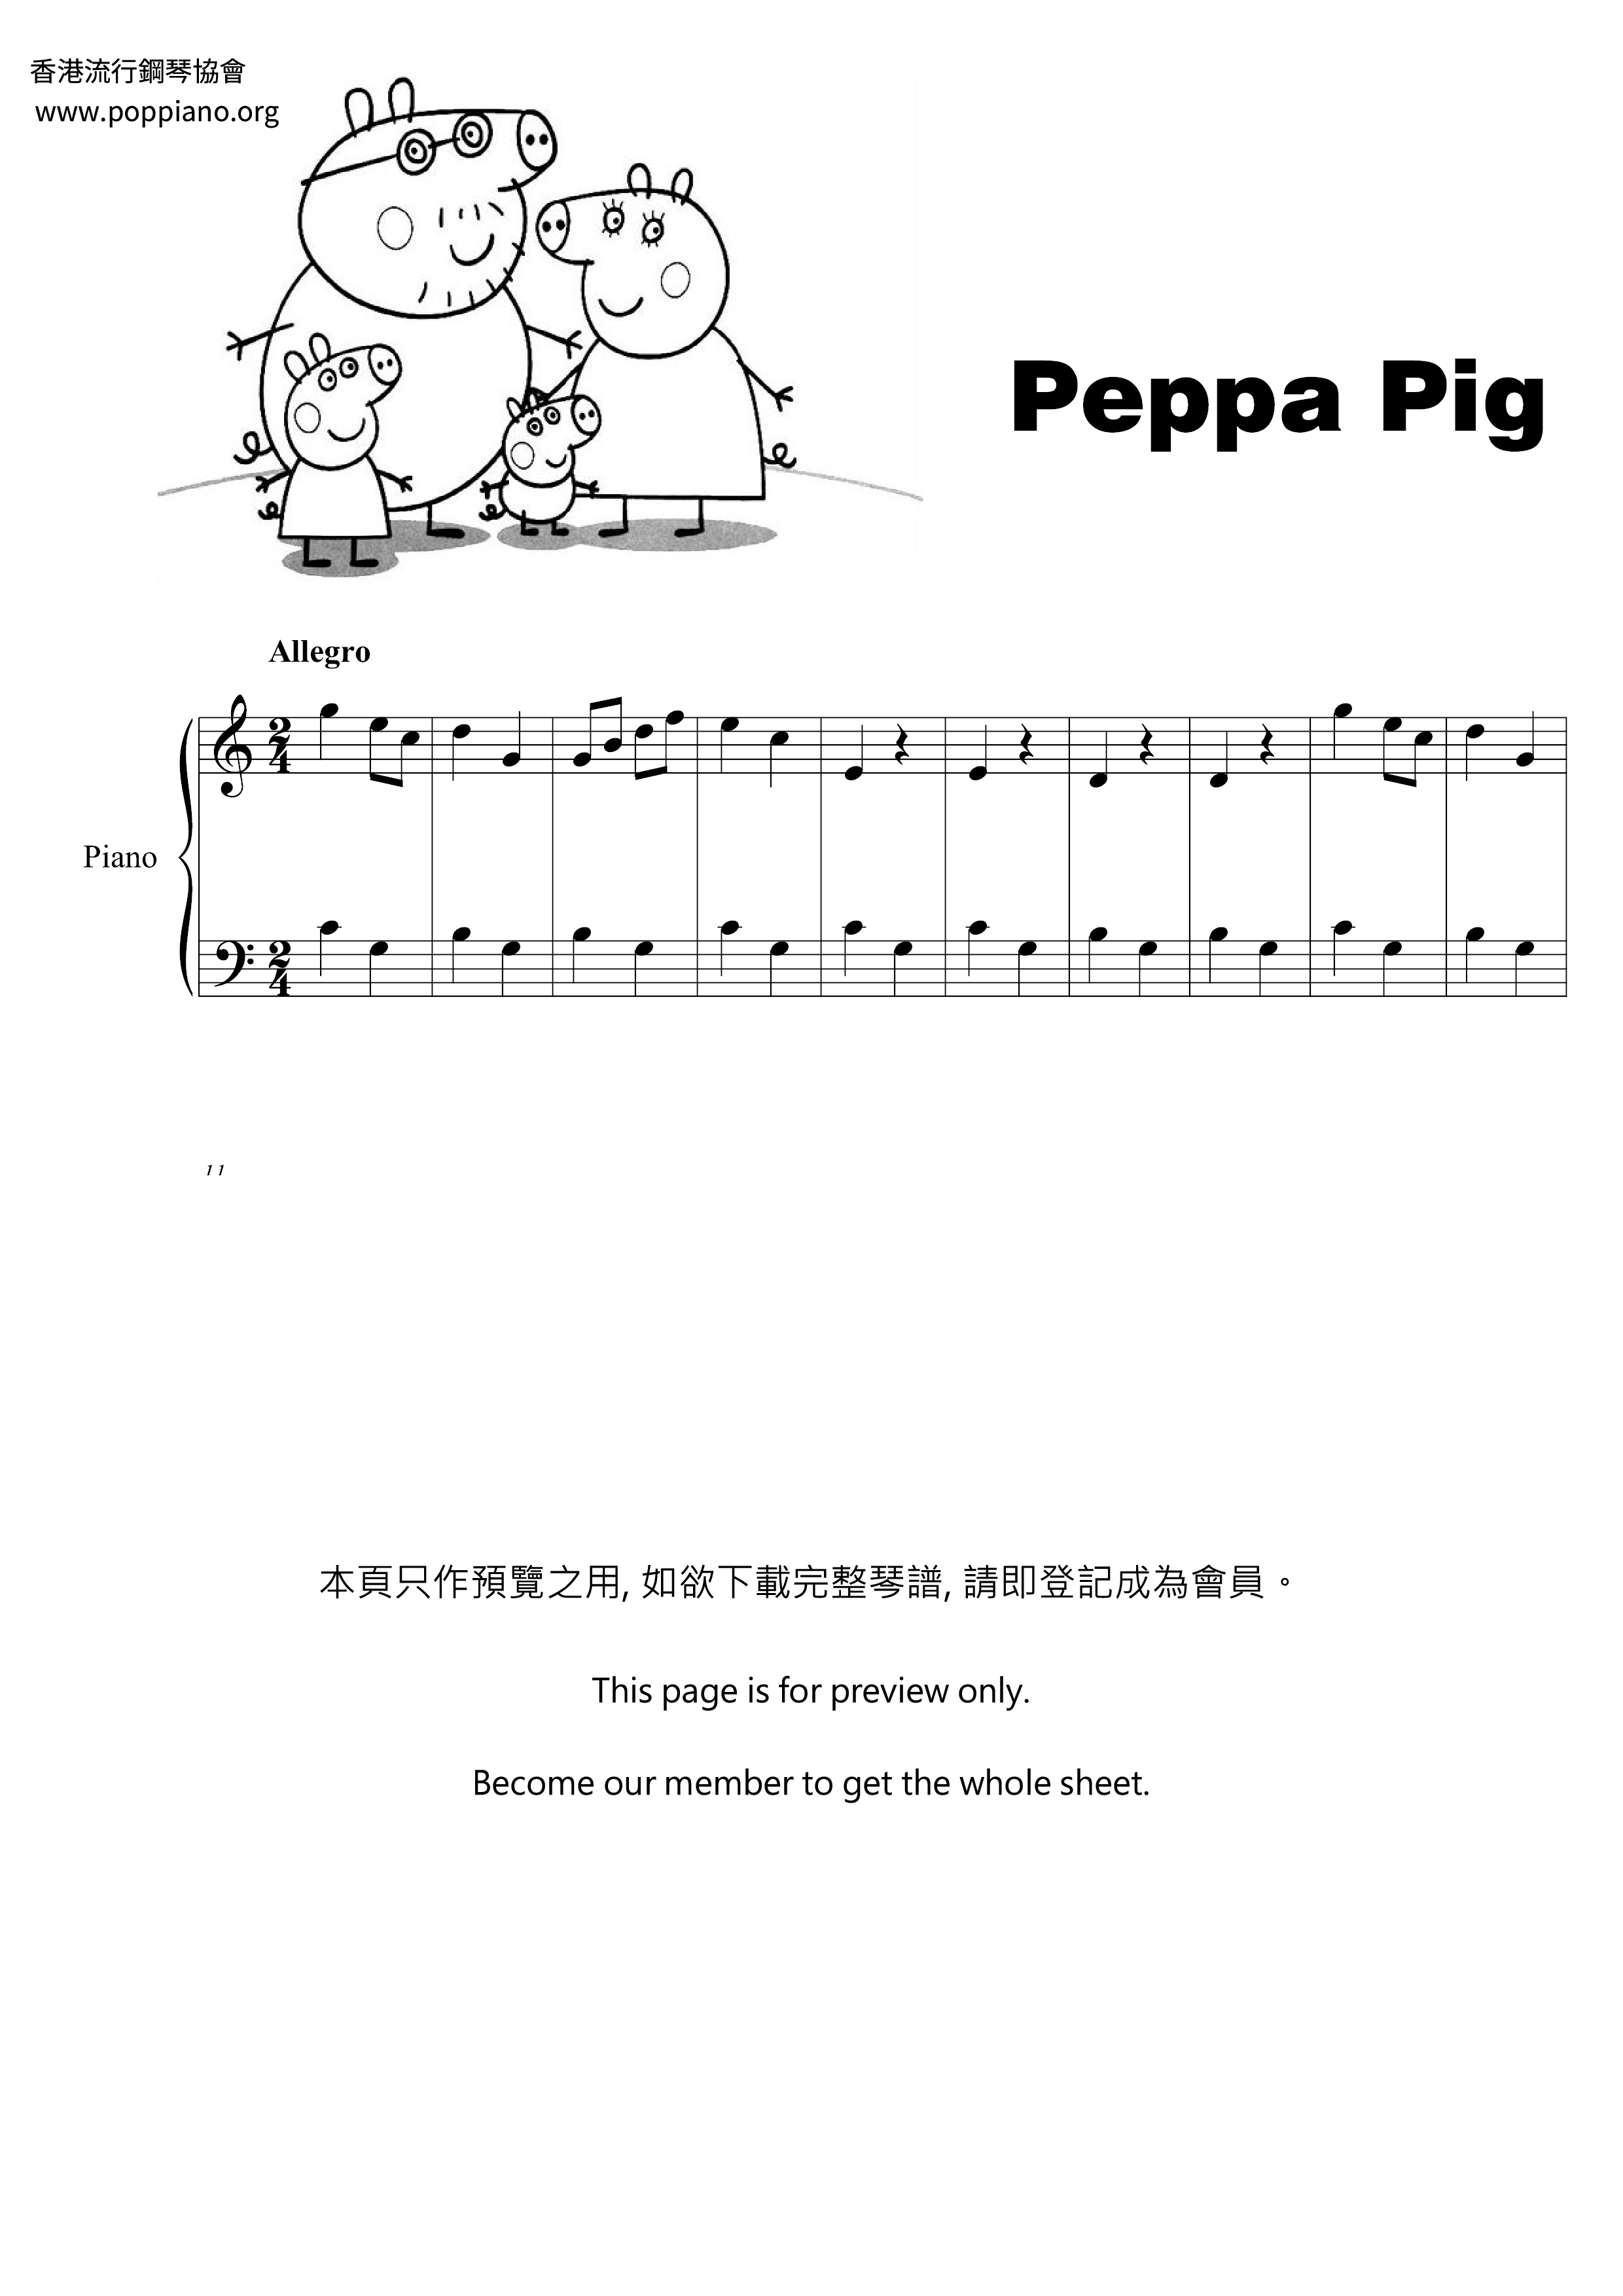 Peppa Pigピアノ譜